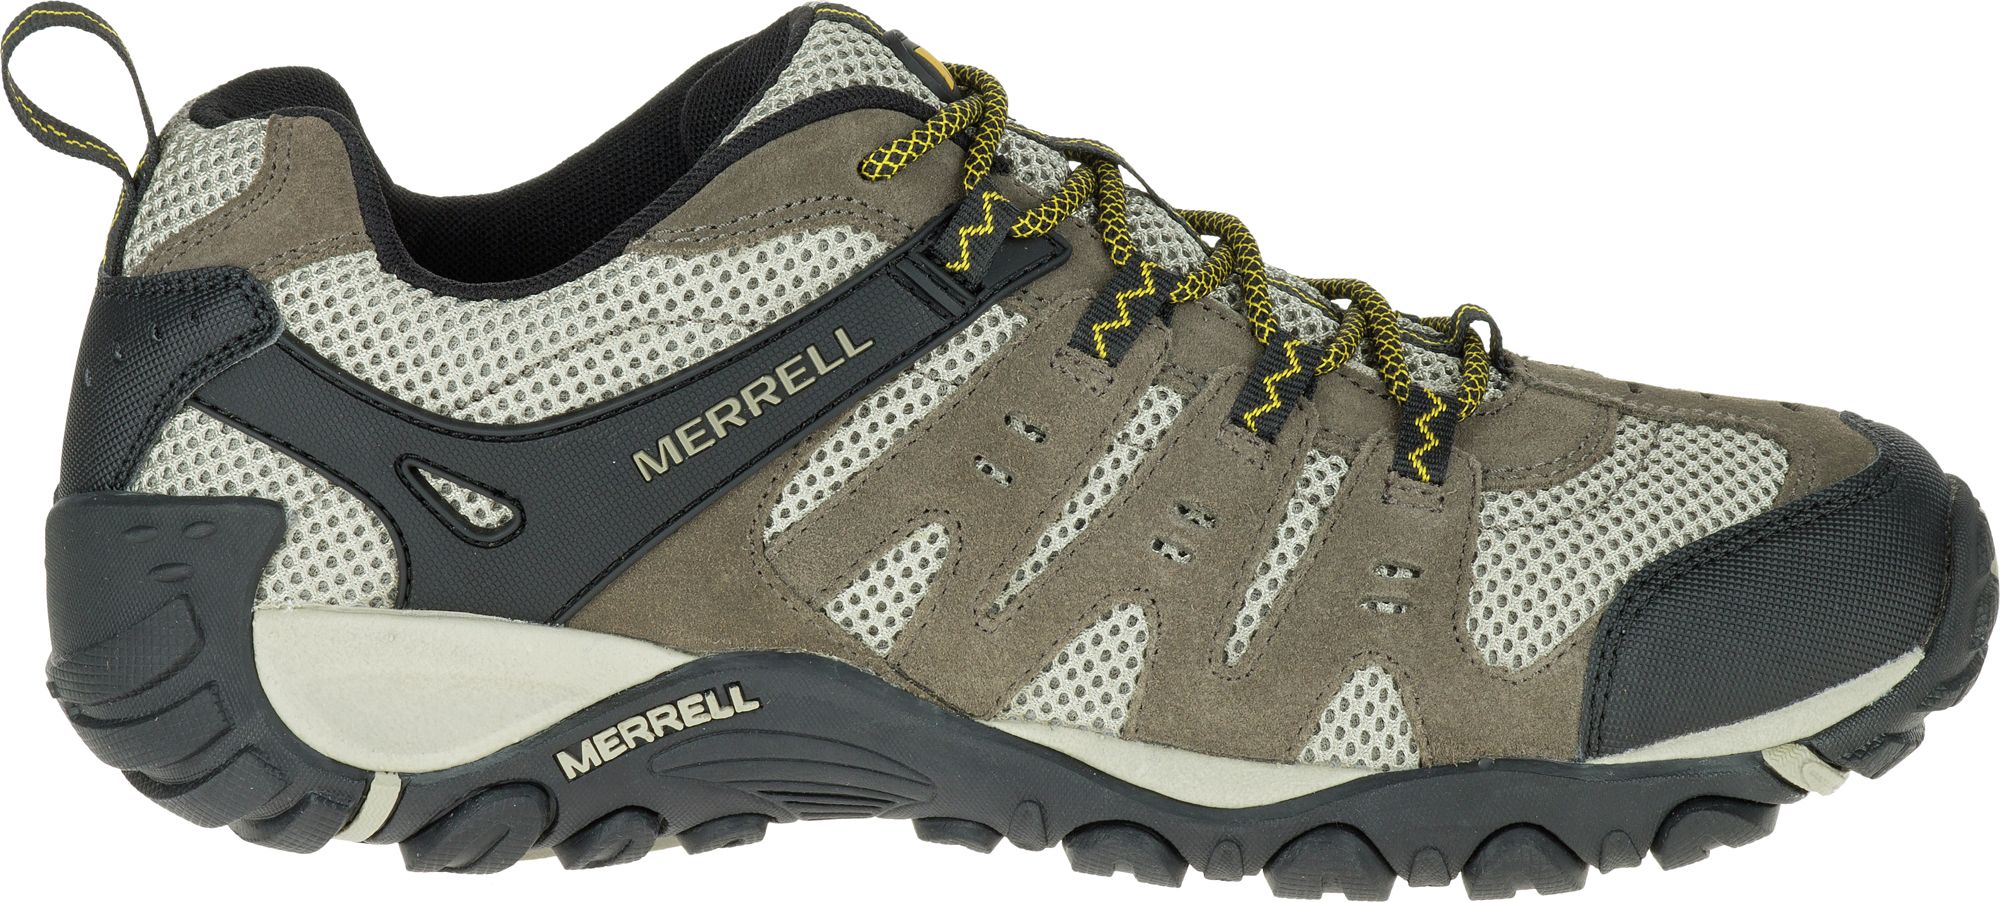 merrell men's accentor stretch walking shoe